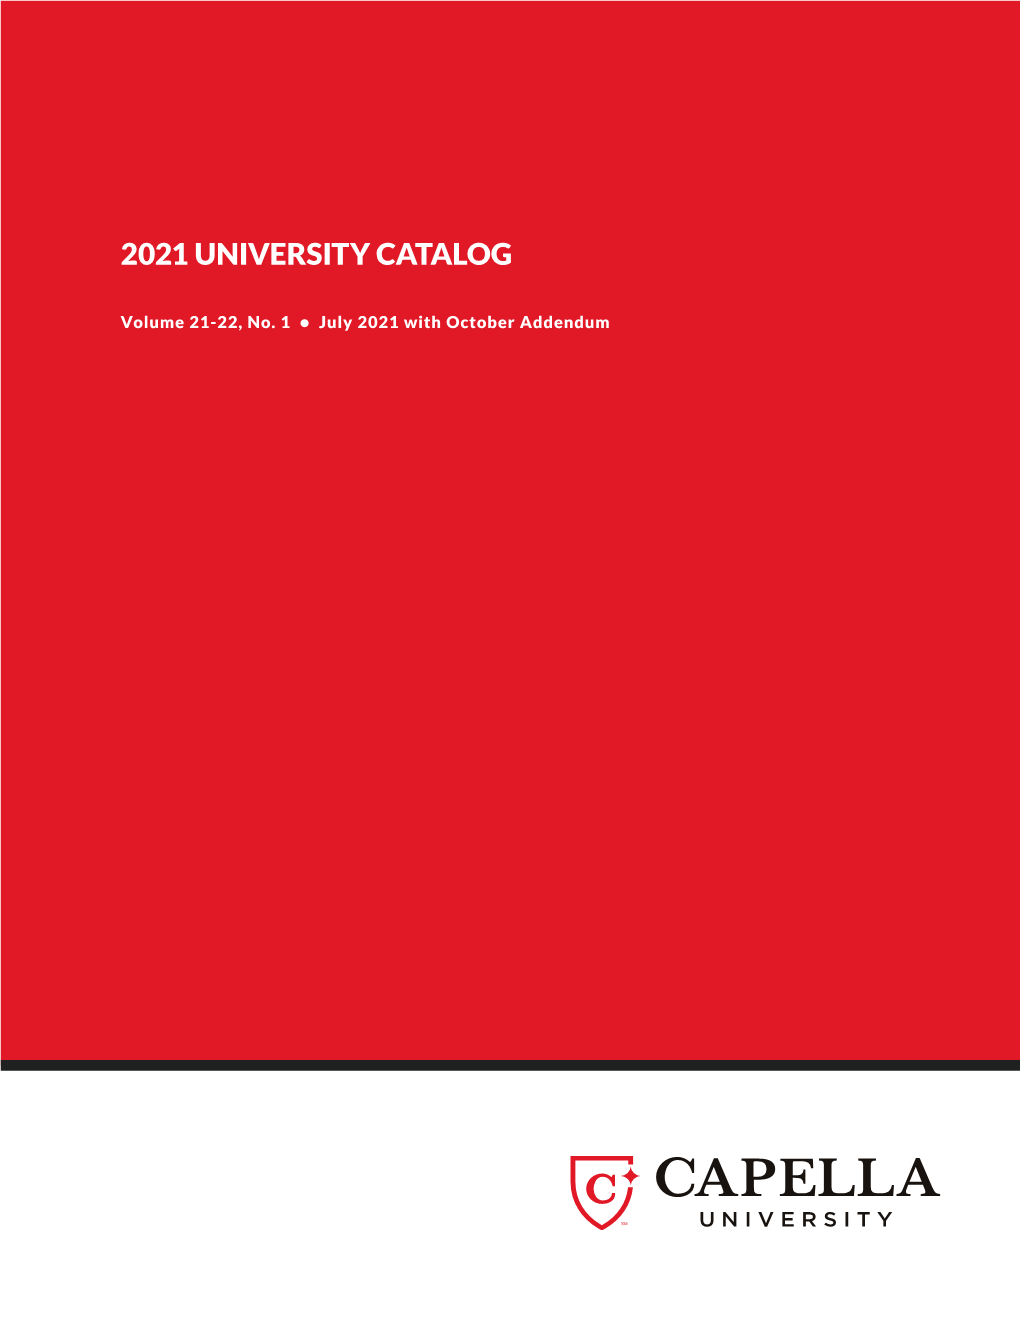 2021 University Catalog